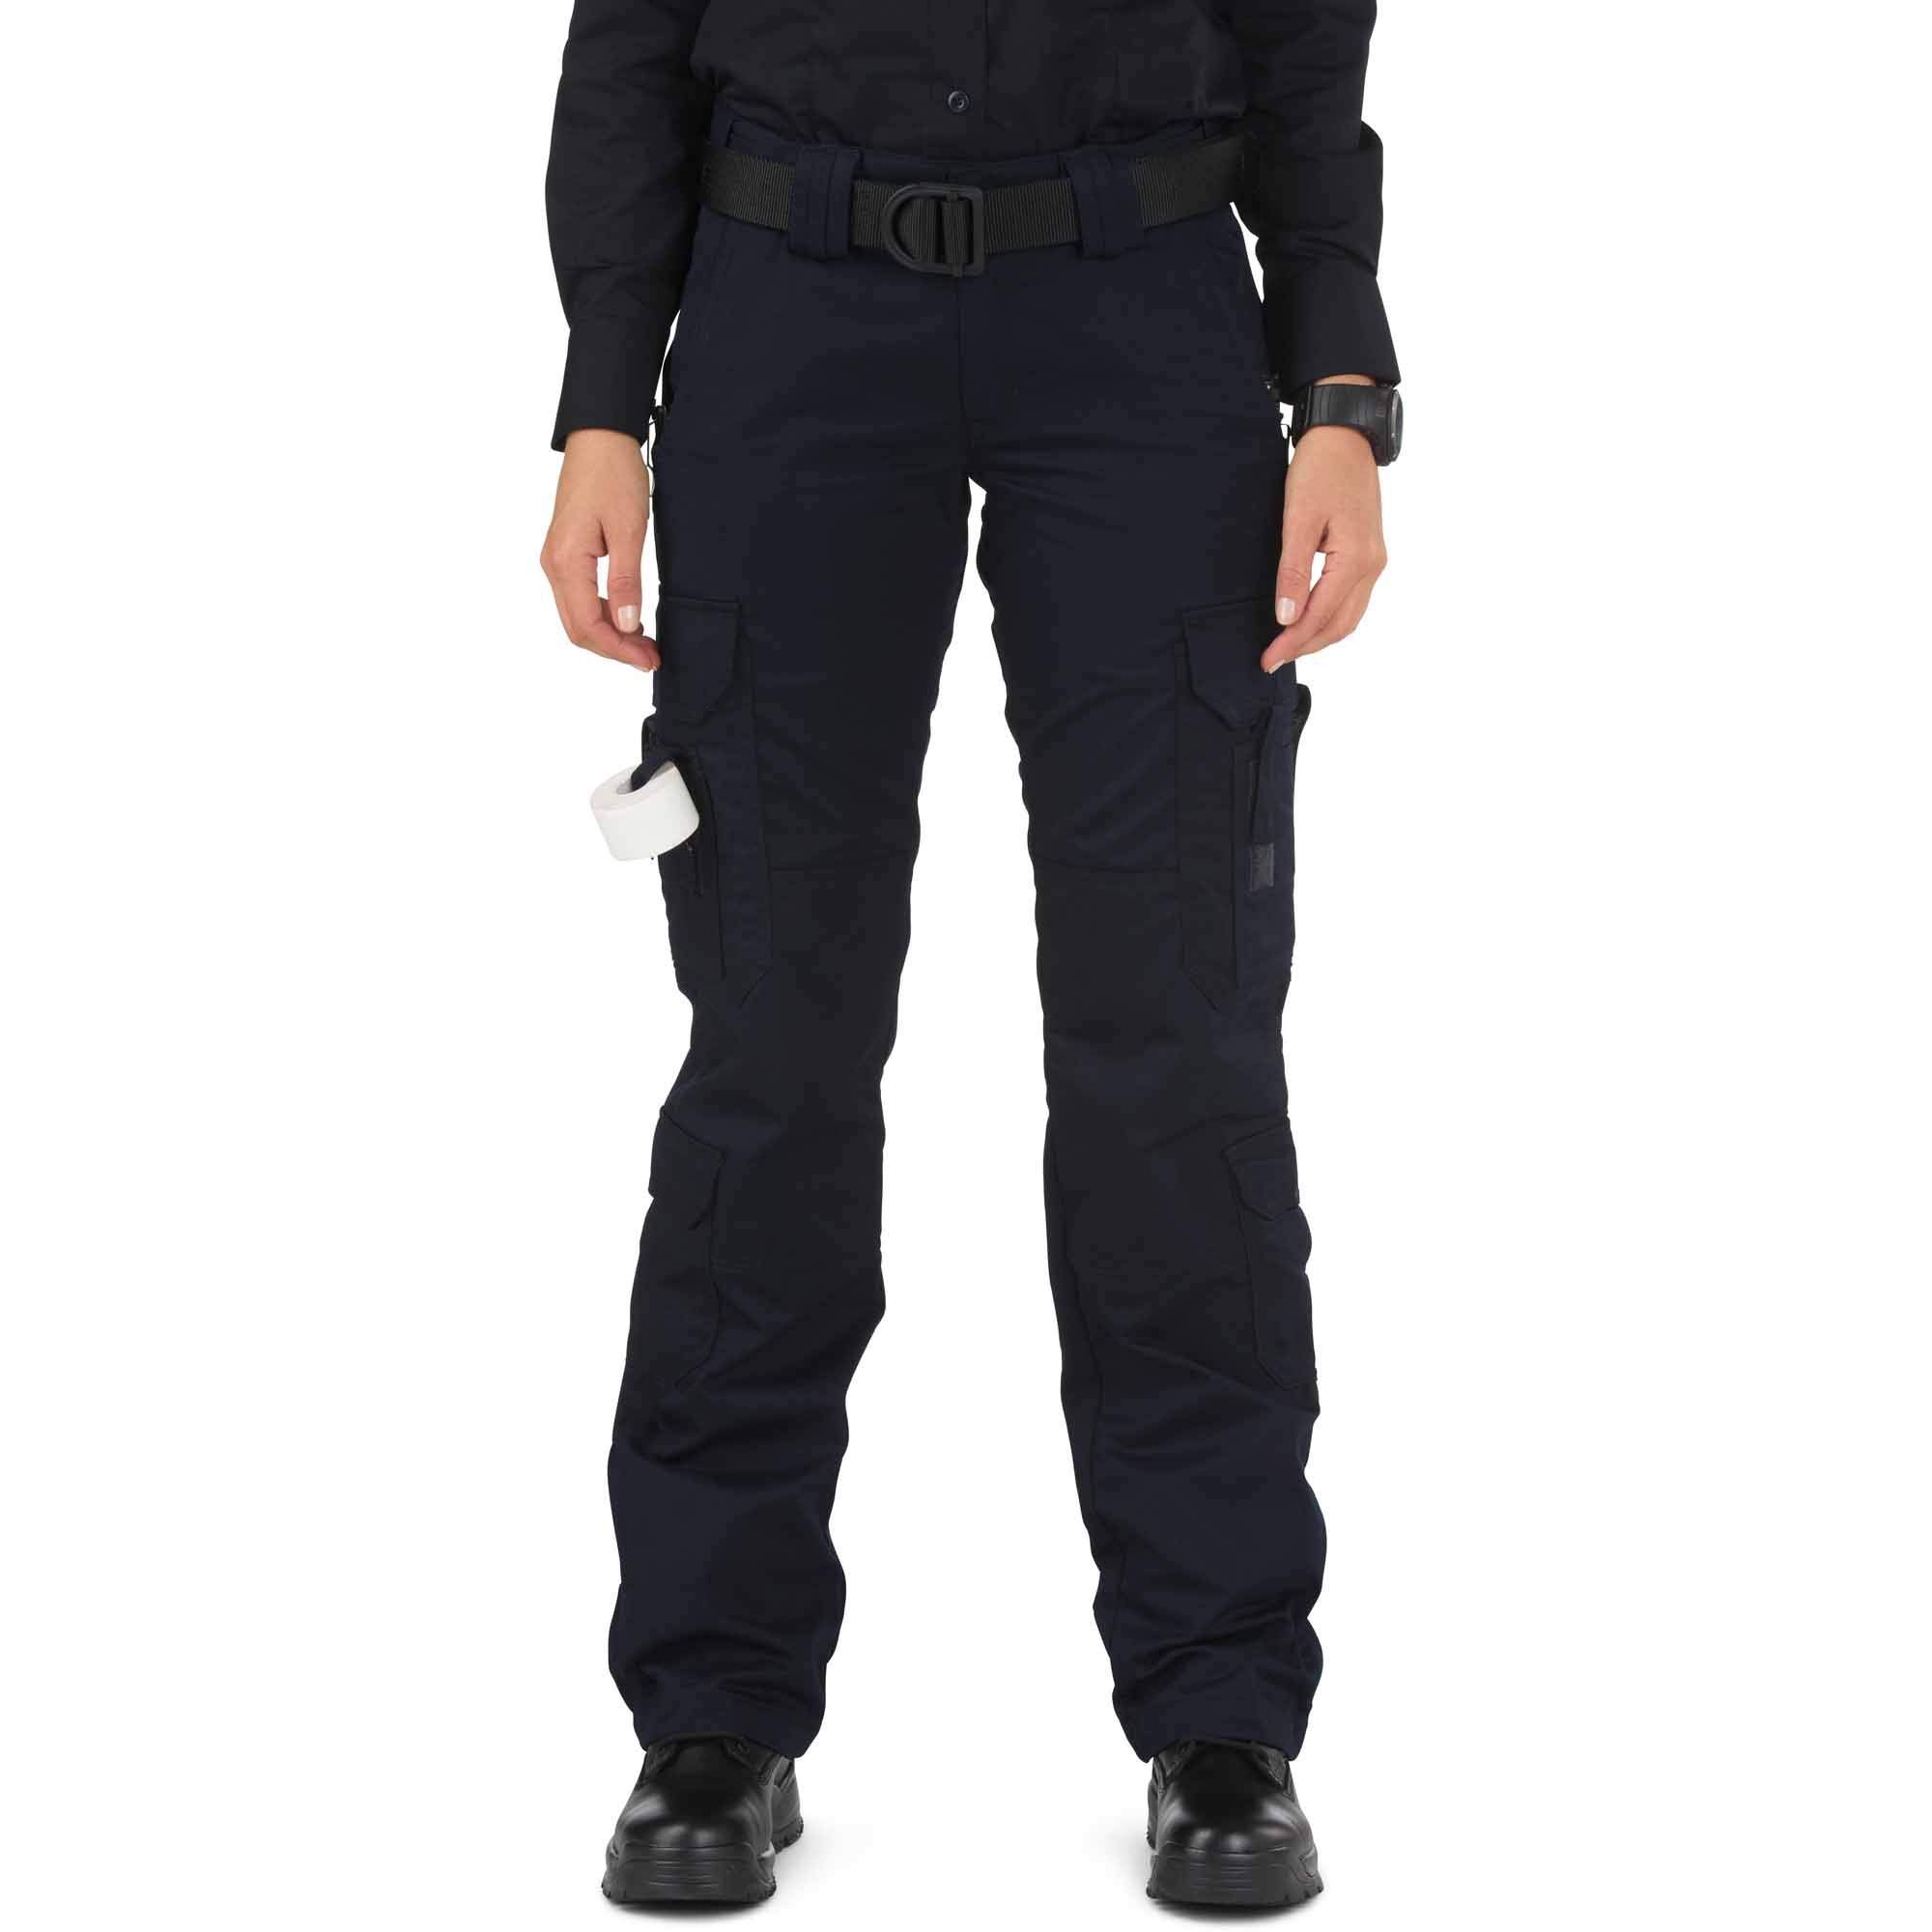 5.11 Tactical Women's Taclite Lightweight EMS Pants, Adjustable Waistband, Teflon Finish, Style 64369